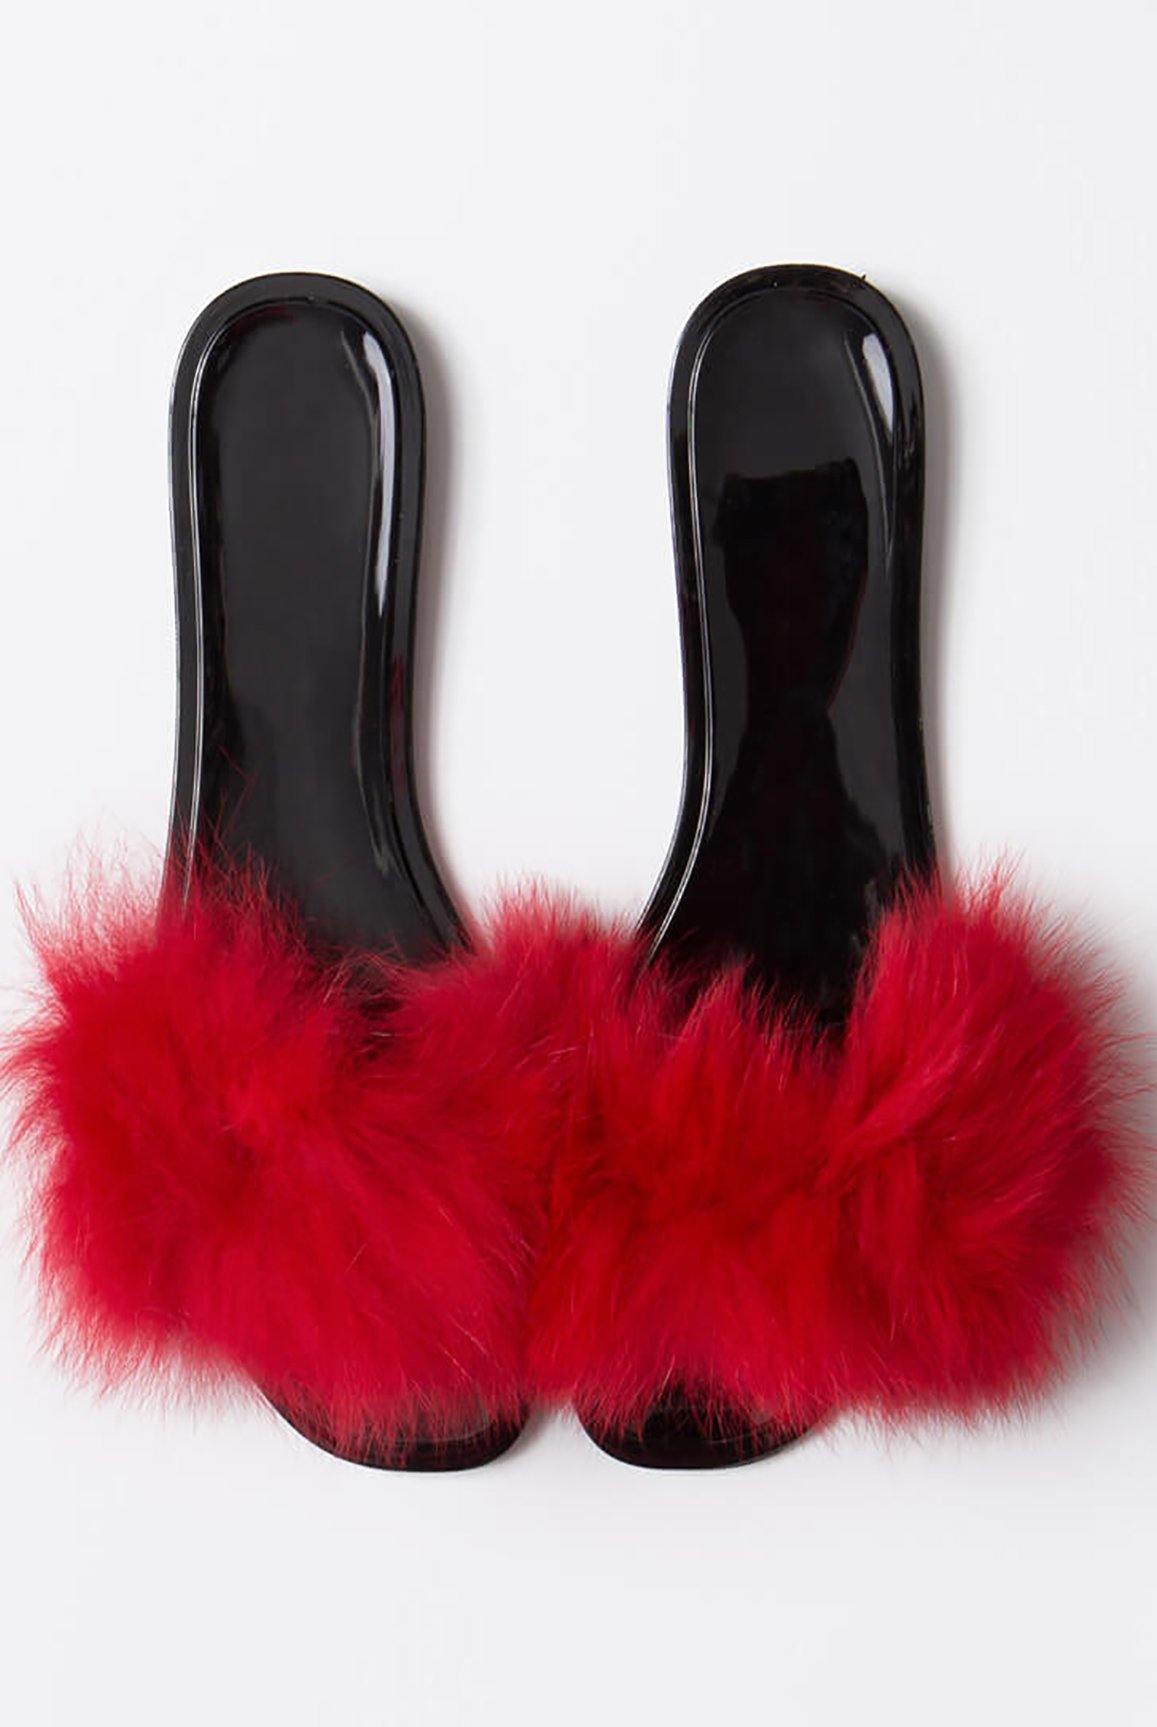 Jackie-03.....Jelly Fur Sandal Slides | Swagg Boutique LLC.